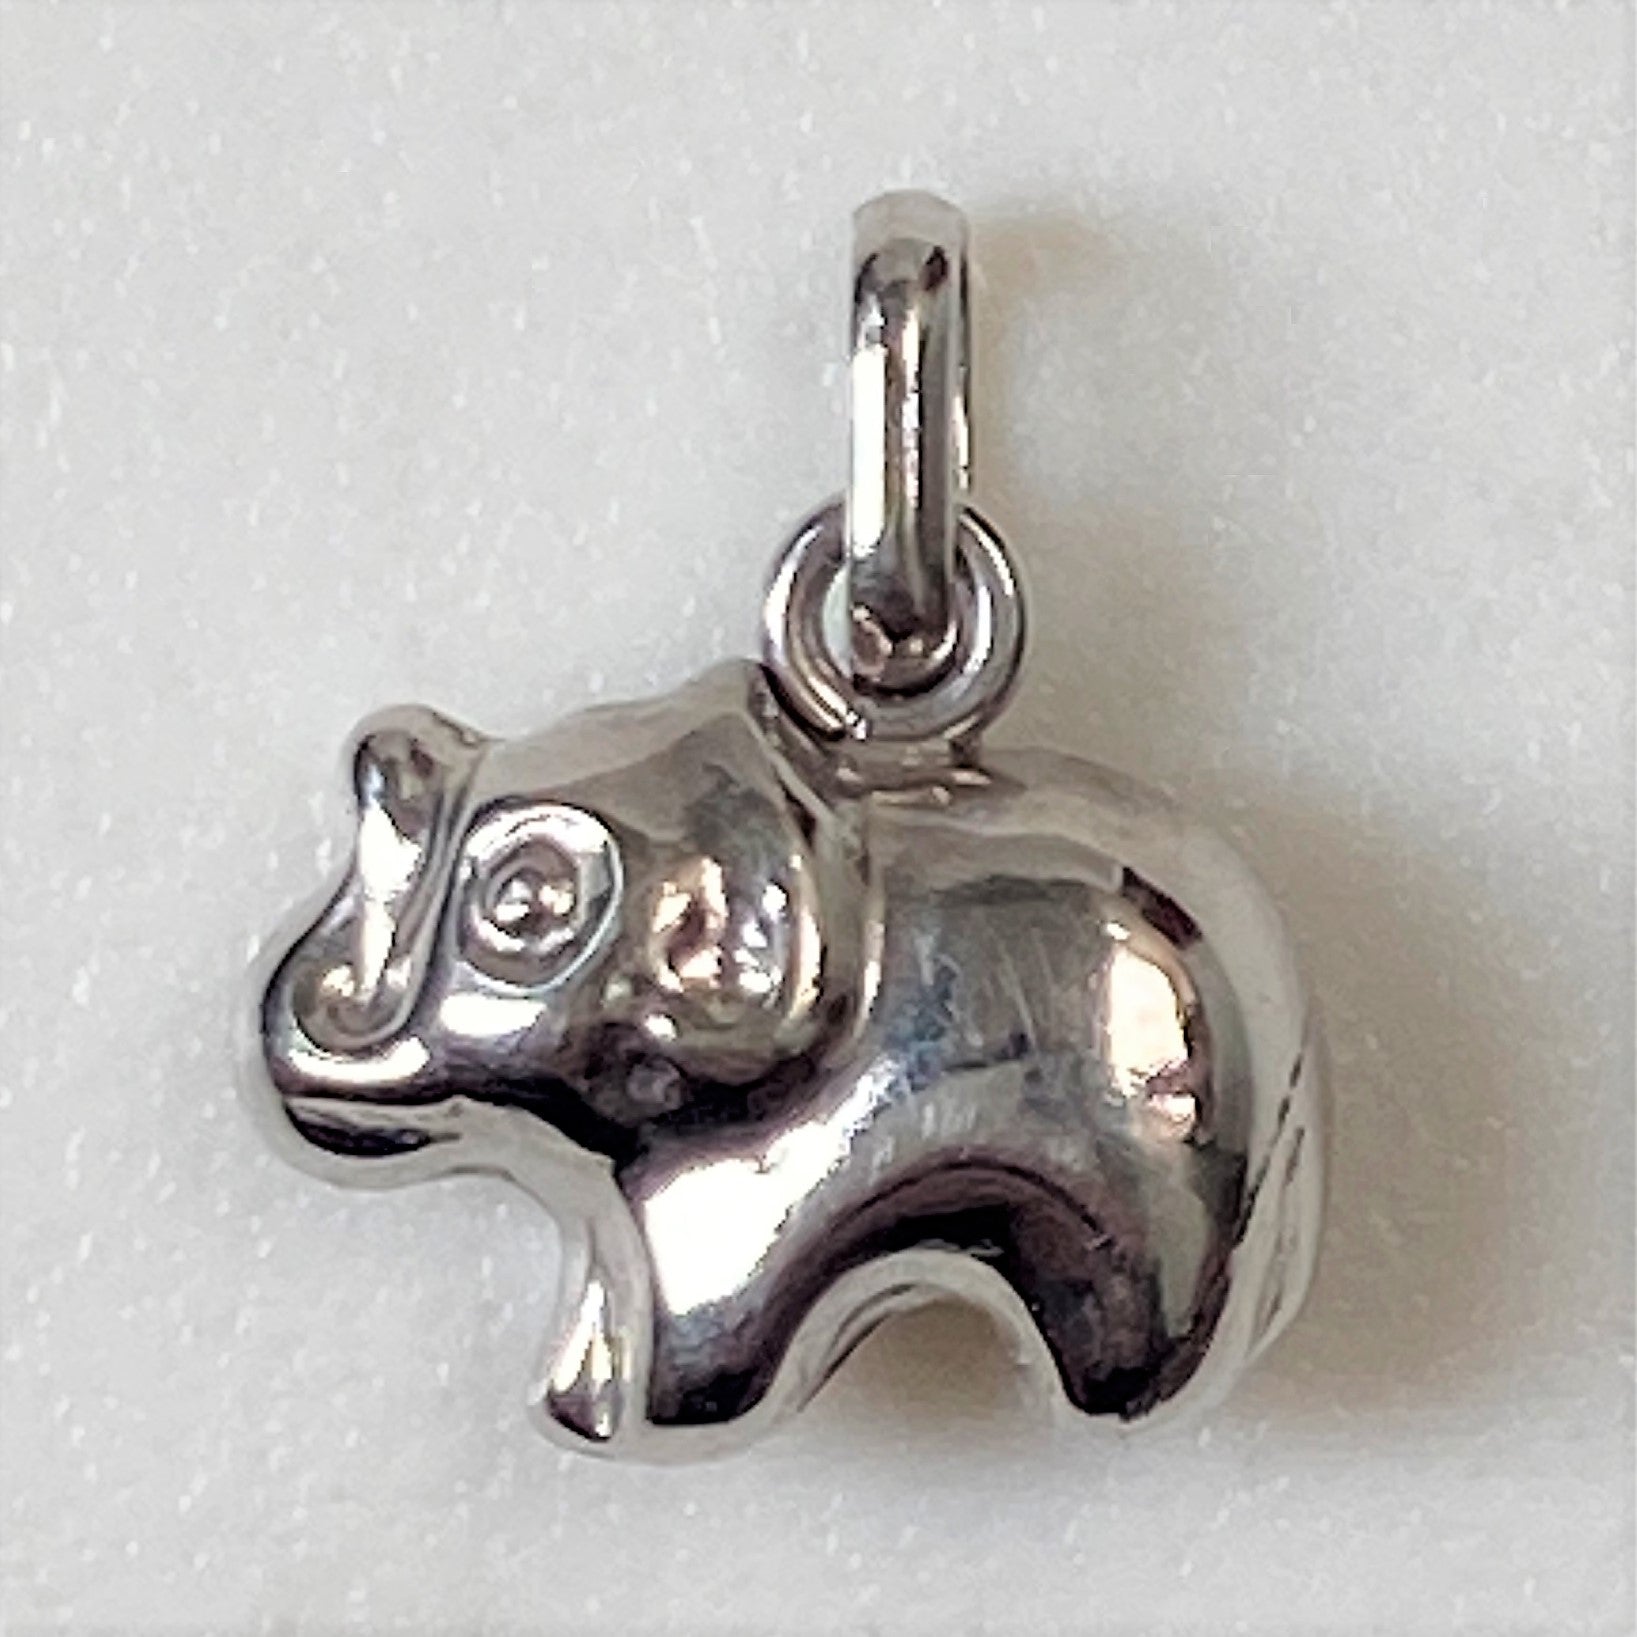 Small 9ct White Gold “Elephant” Charm Pendant